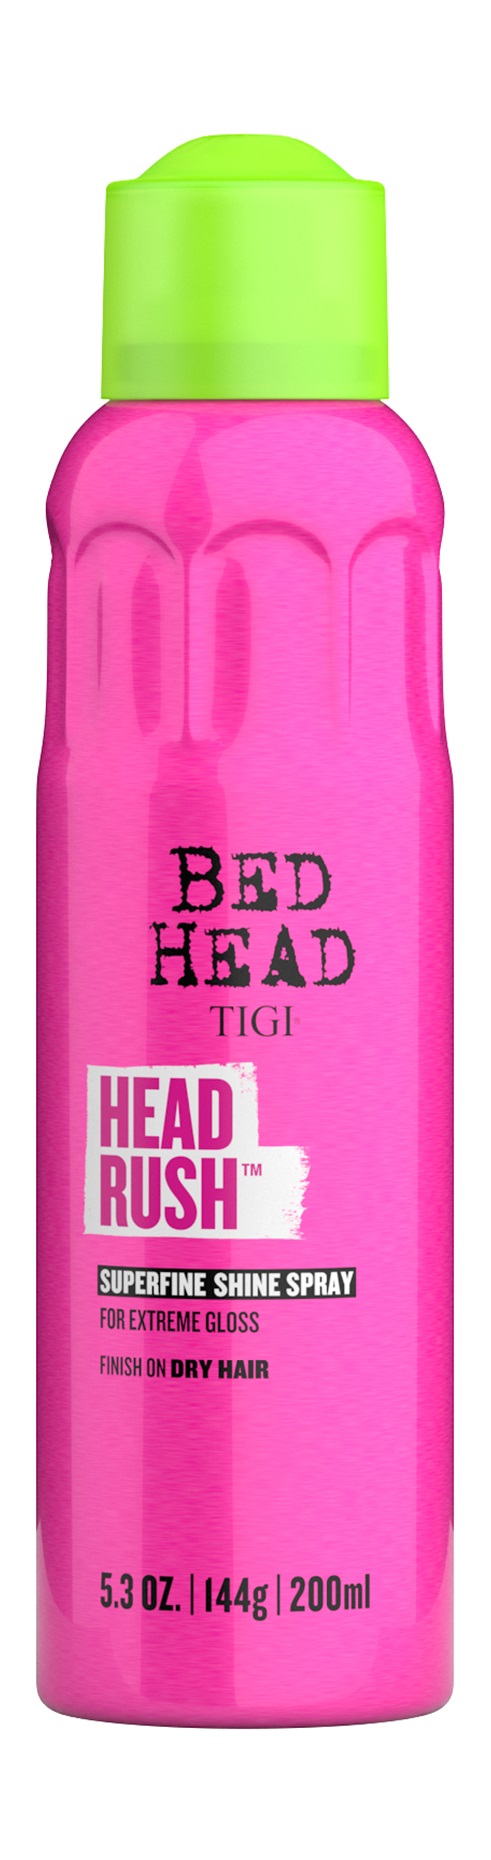 Tigi bed head head rush спрей для придания блеска волосам 200 мл